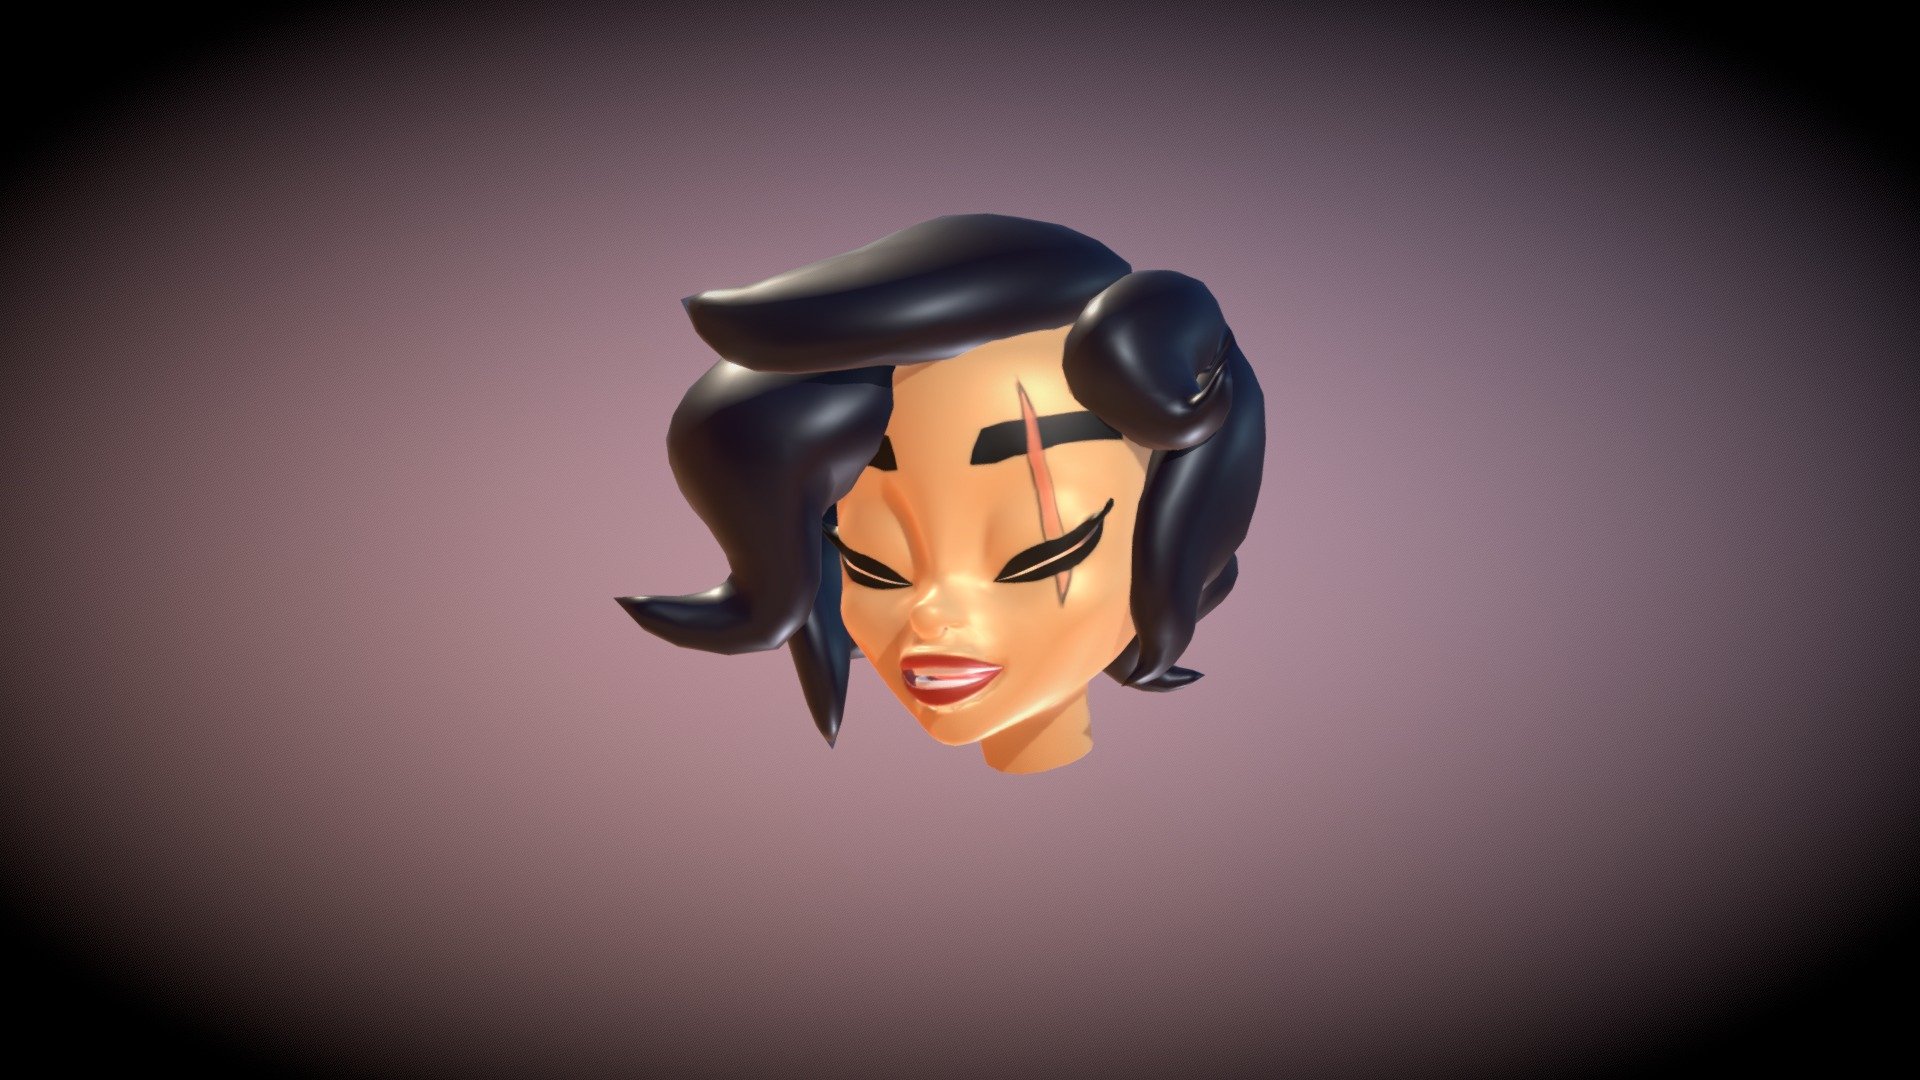 Iris lips &tongue - Download Free 3D model by OldGameFan 3d model